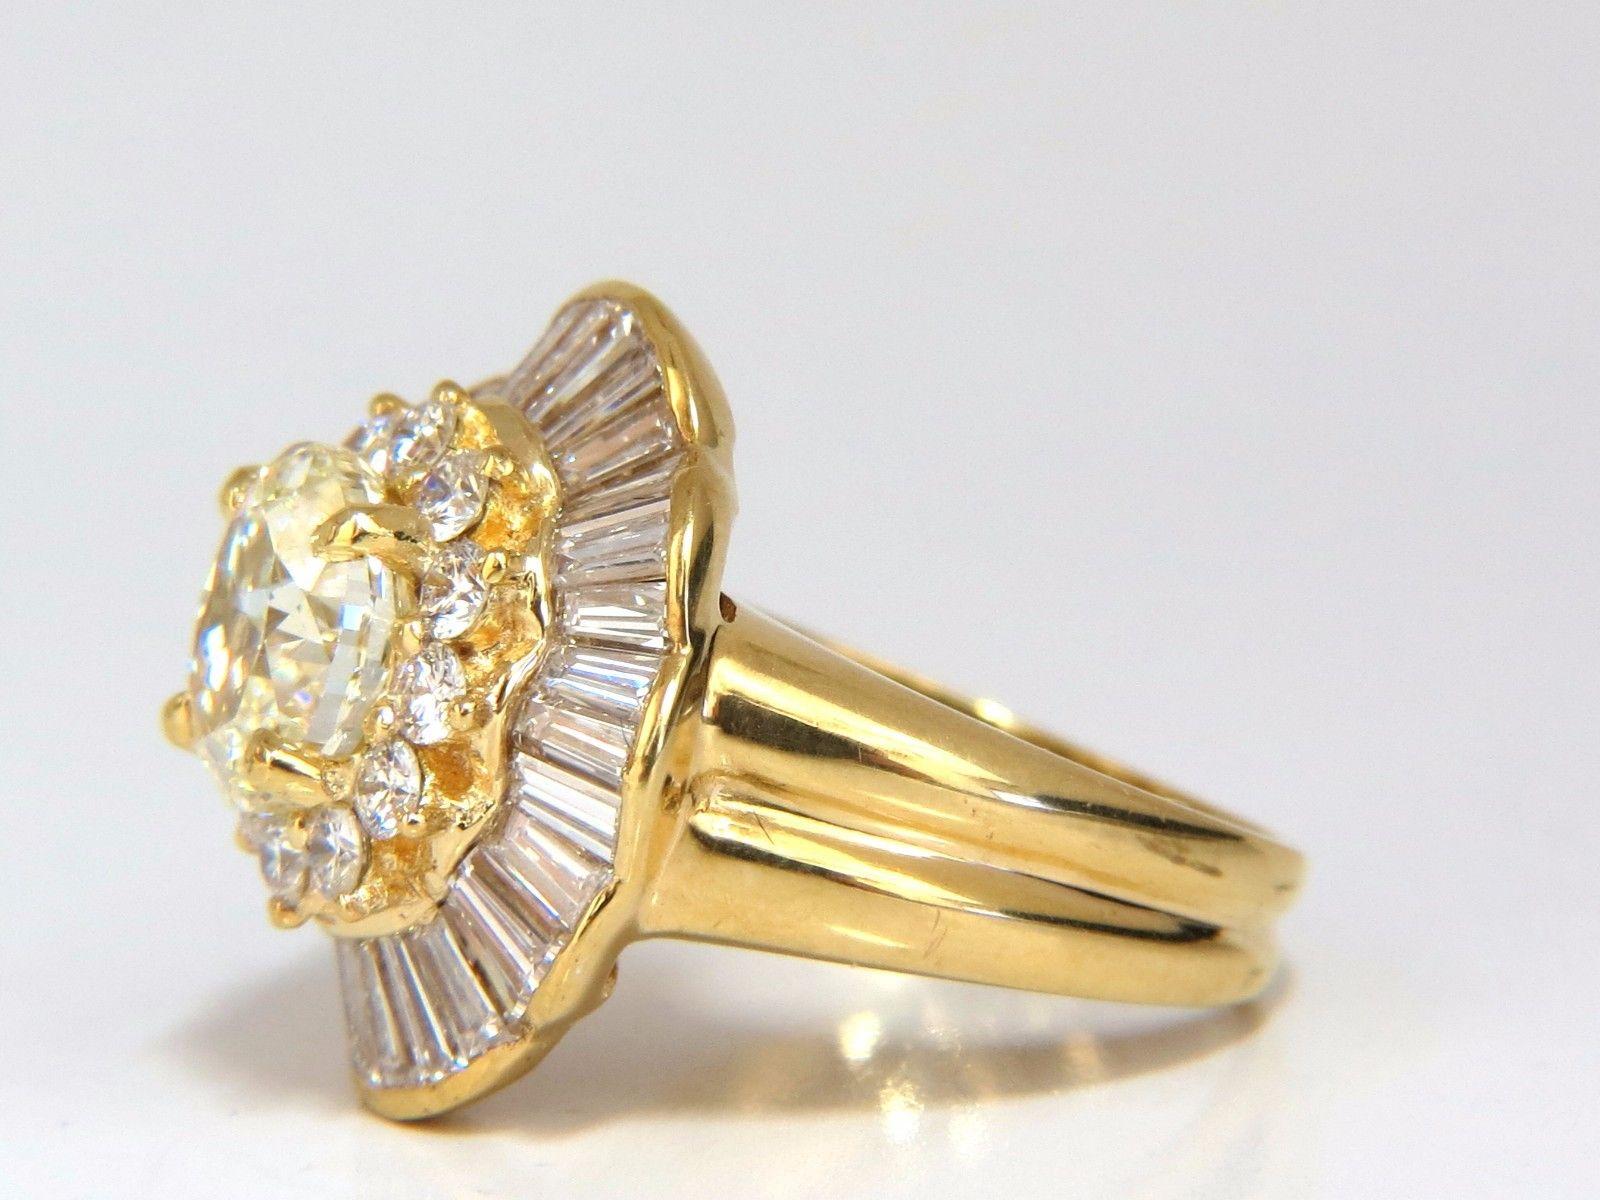 Oval Cut GIA Certified 4.51carat Natural Yellow Diamond Ring 18 Karat Ballerina Prime For Sale